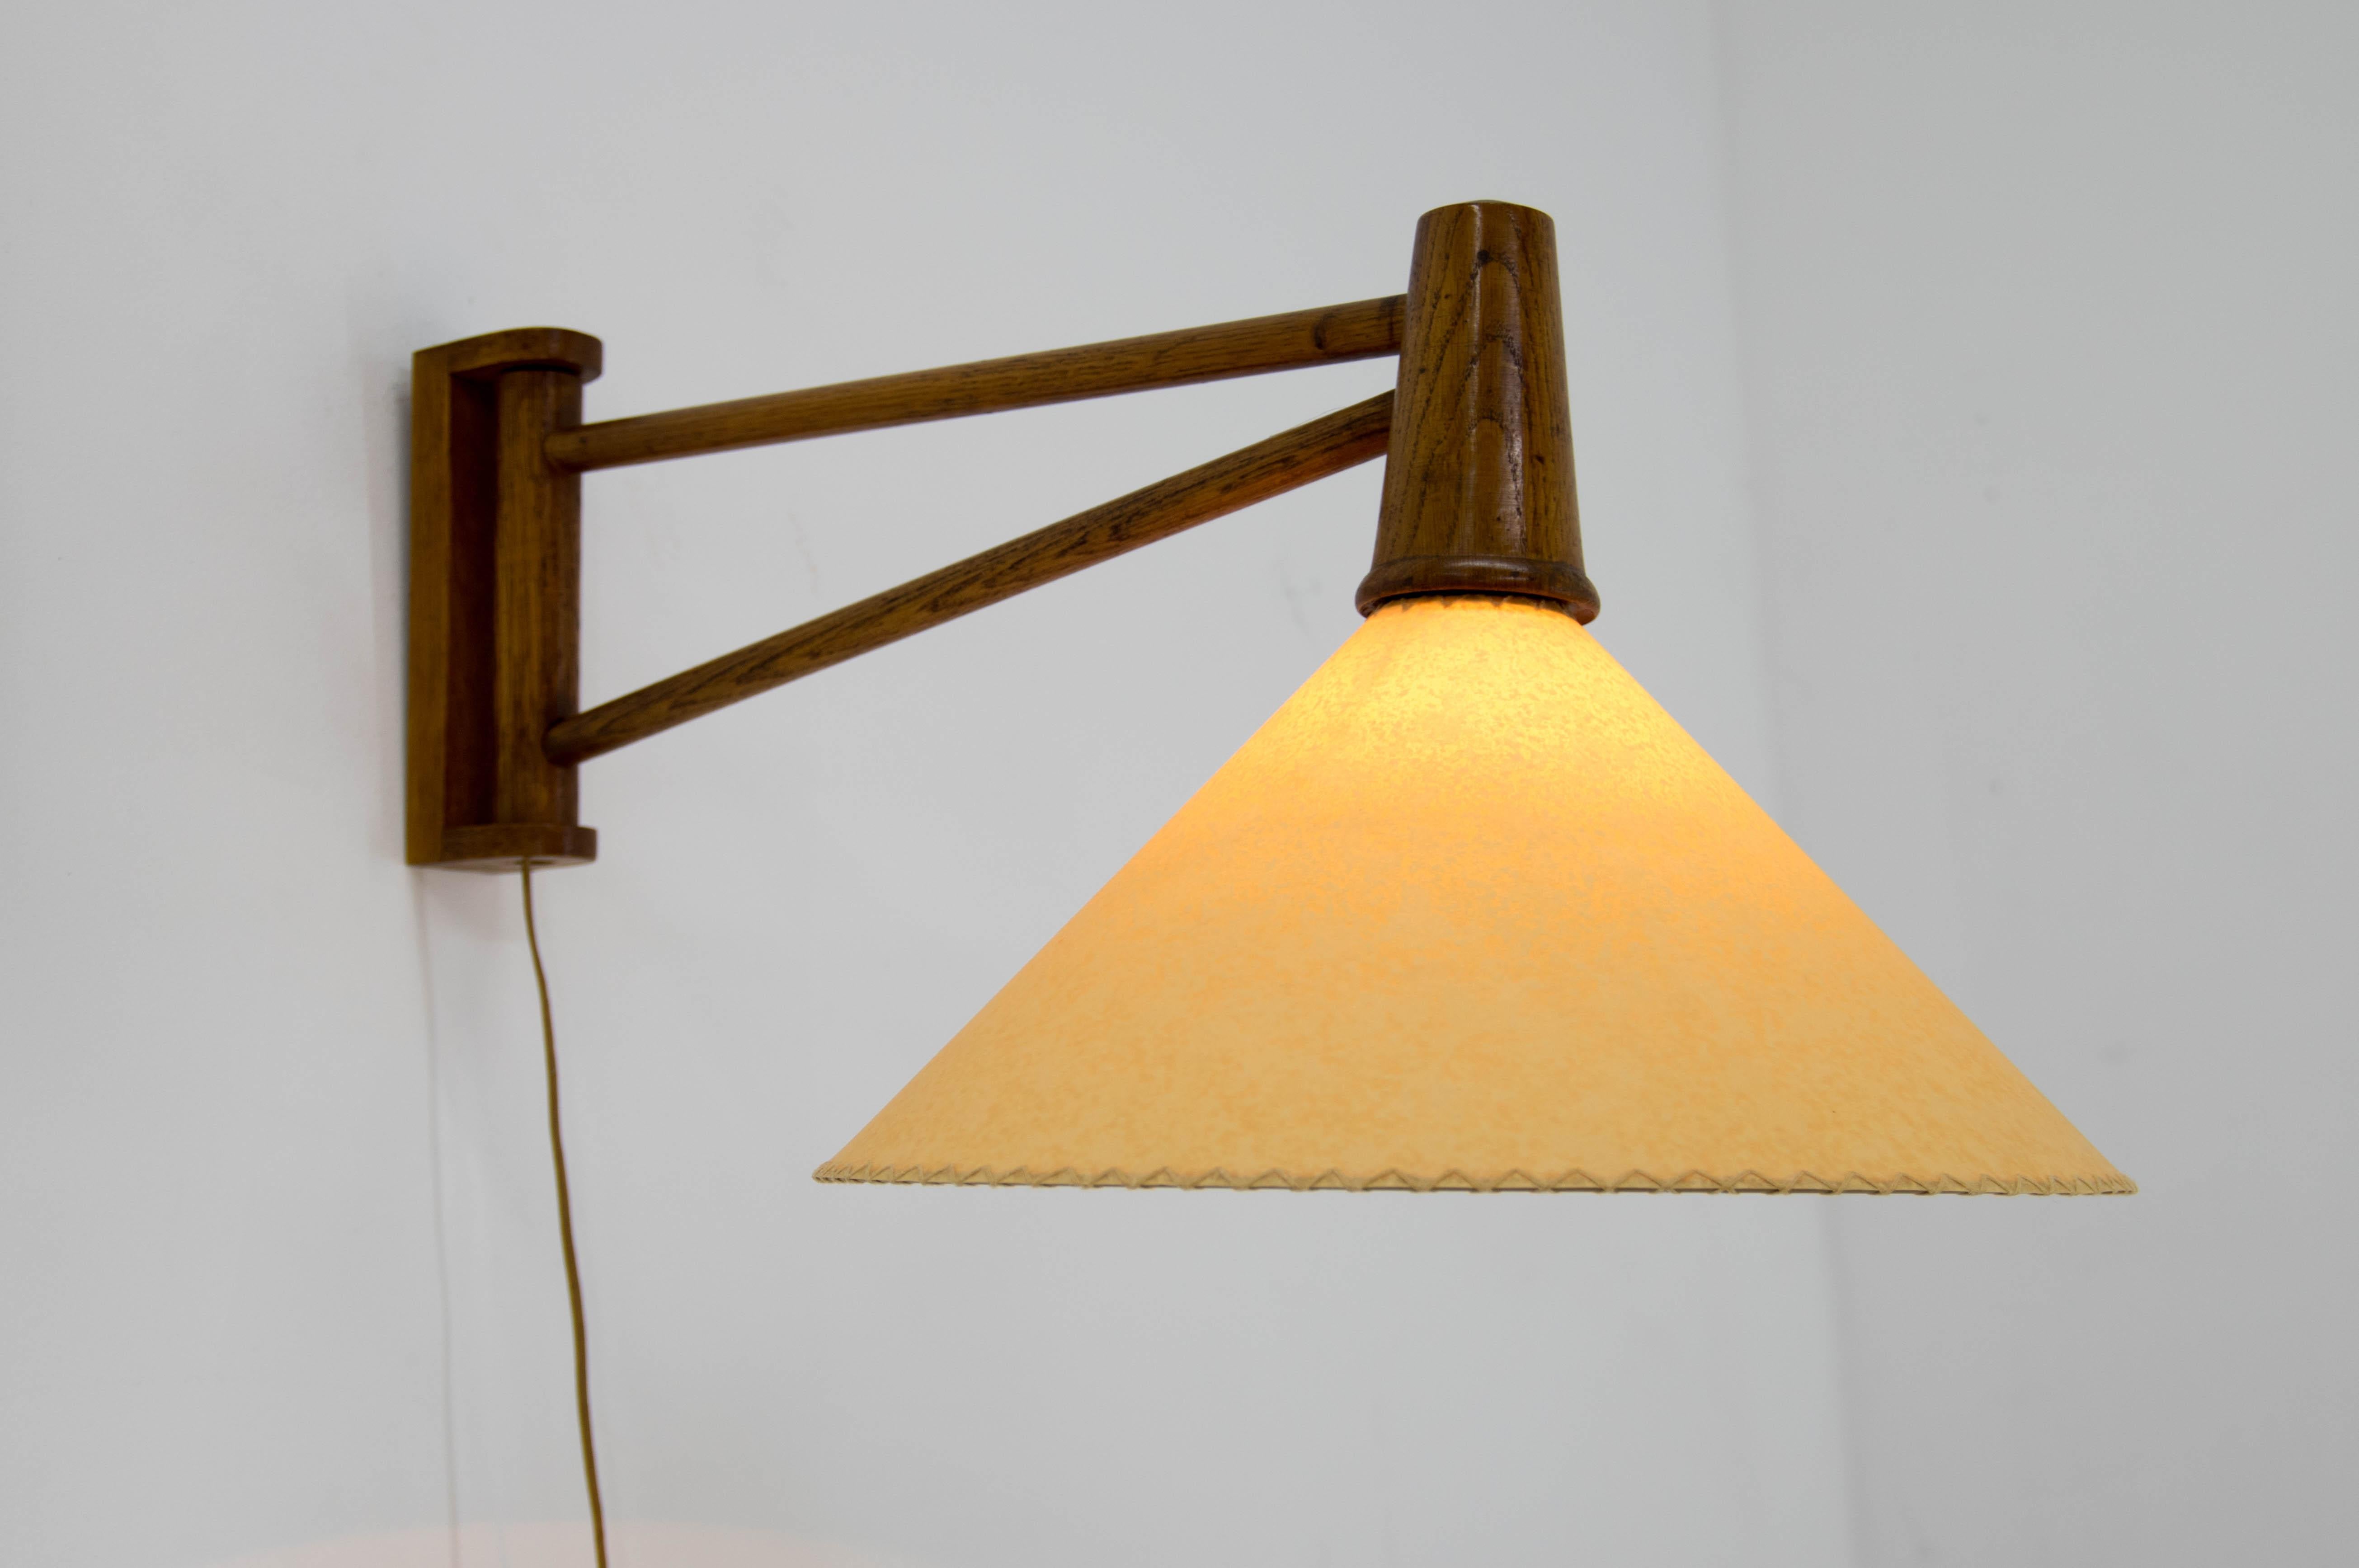 Czech Adjustable Wall Lamp by ULUV, 1960s